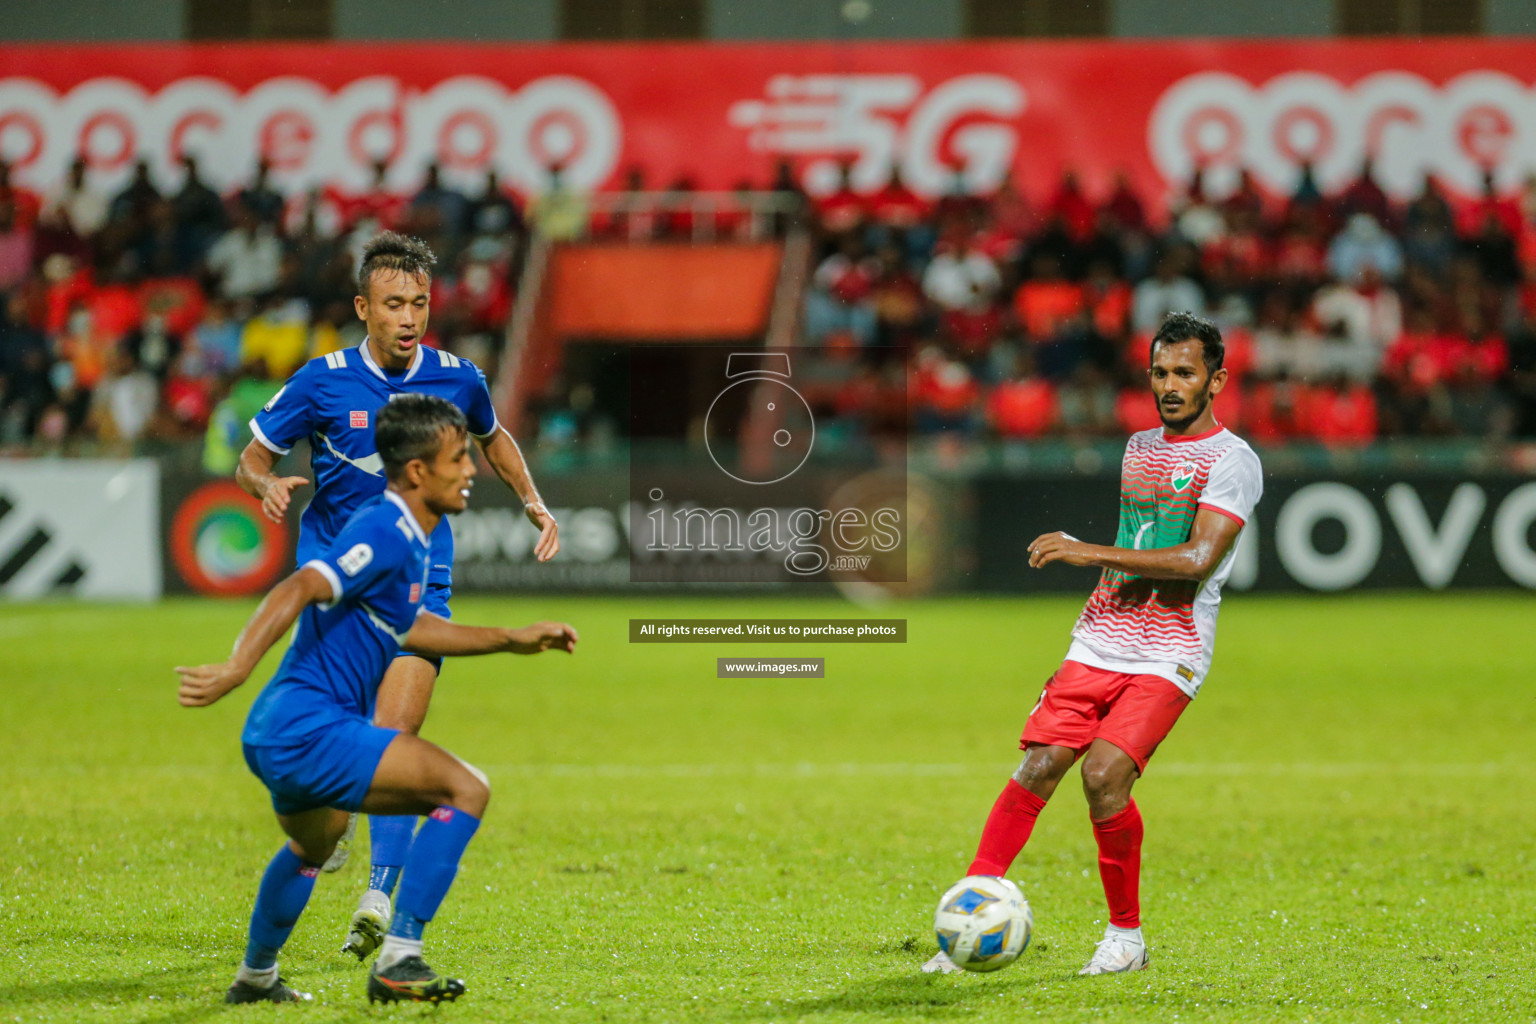 Maldives vs Nepal in SAFF Championship 2021 held on 1st October 2021 in Galolhu National Stadium, Male', Maldives